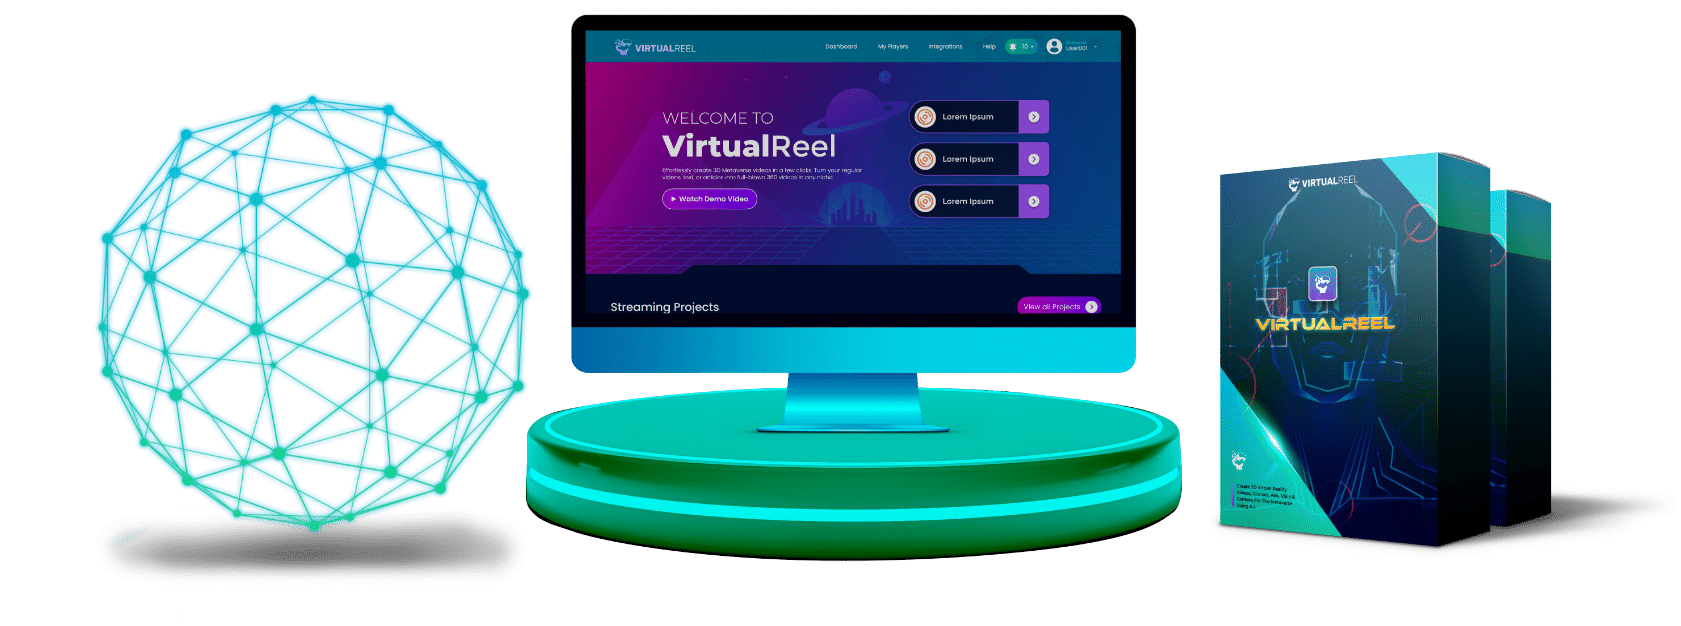 VirtualReel Commercial 